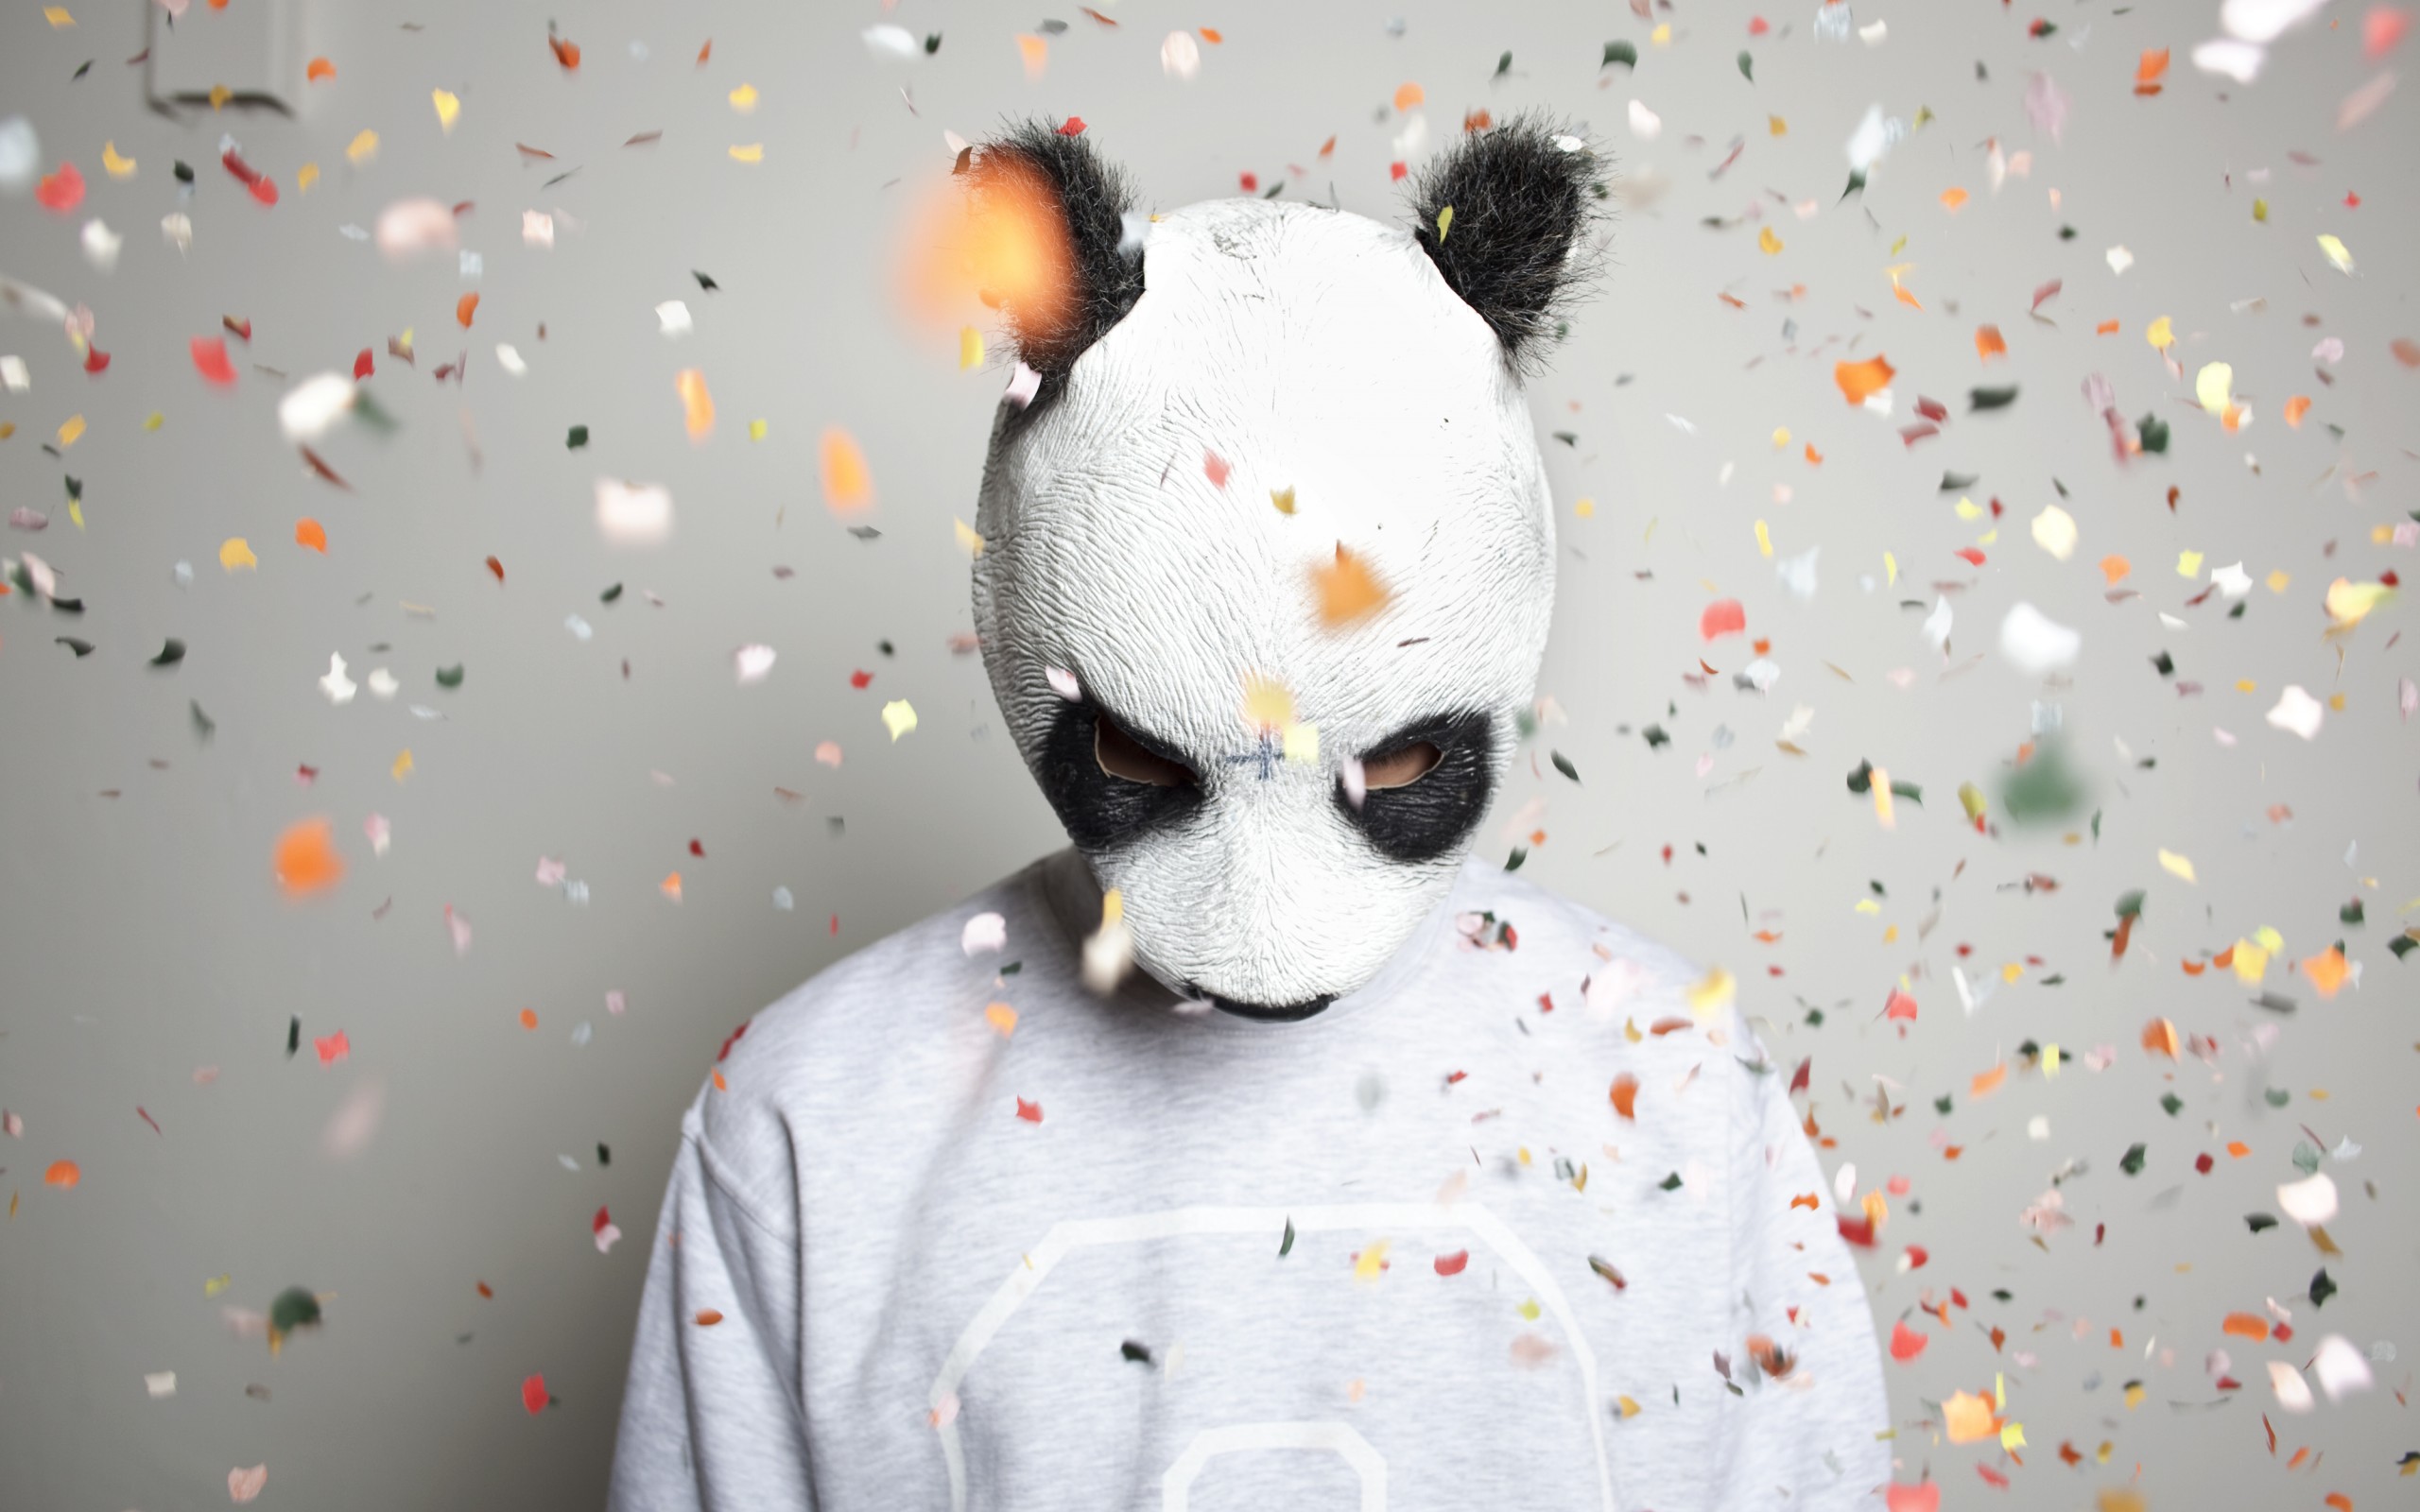 Wallpapers costume panda mask on the desktop